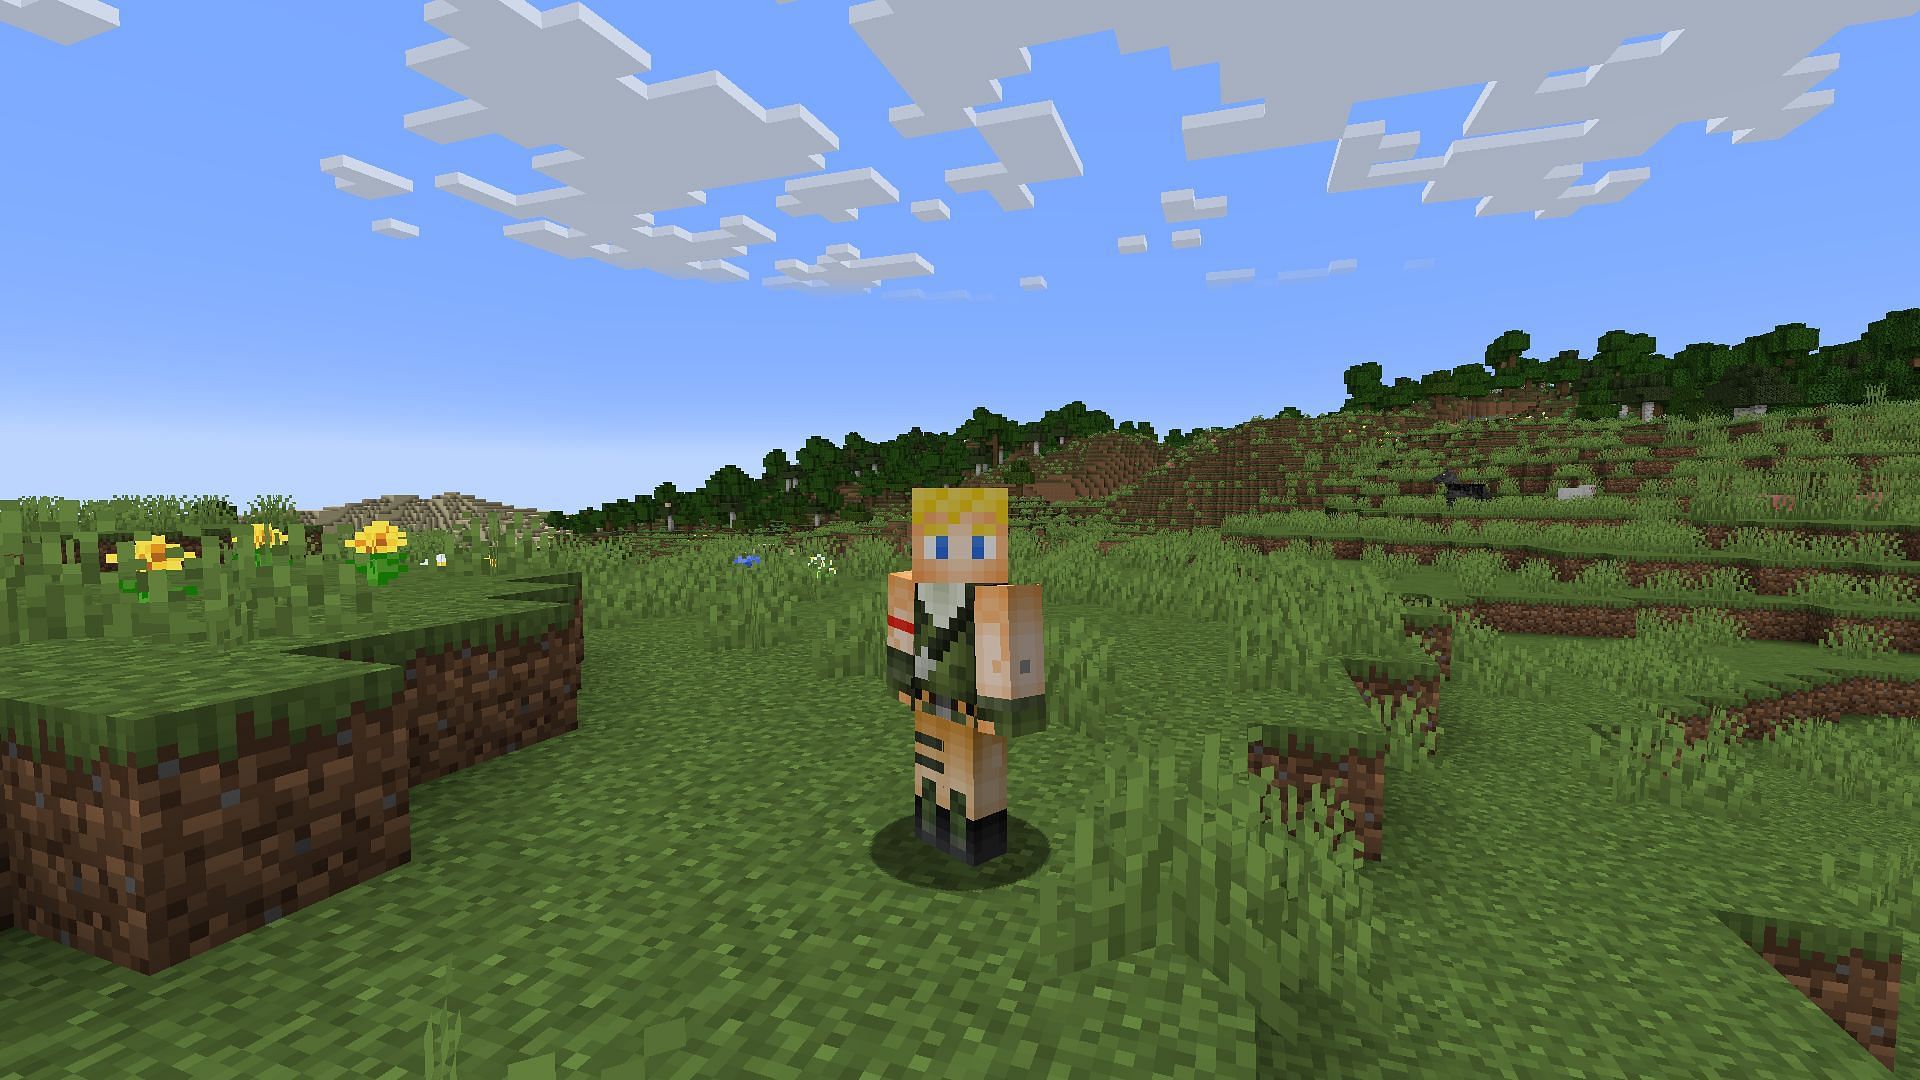 Jonesy may be a default skin, but he still looks pretty great in Minecraft (Image via Mojang)